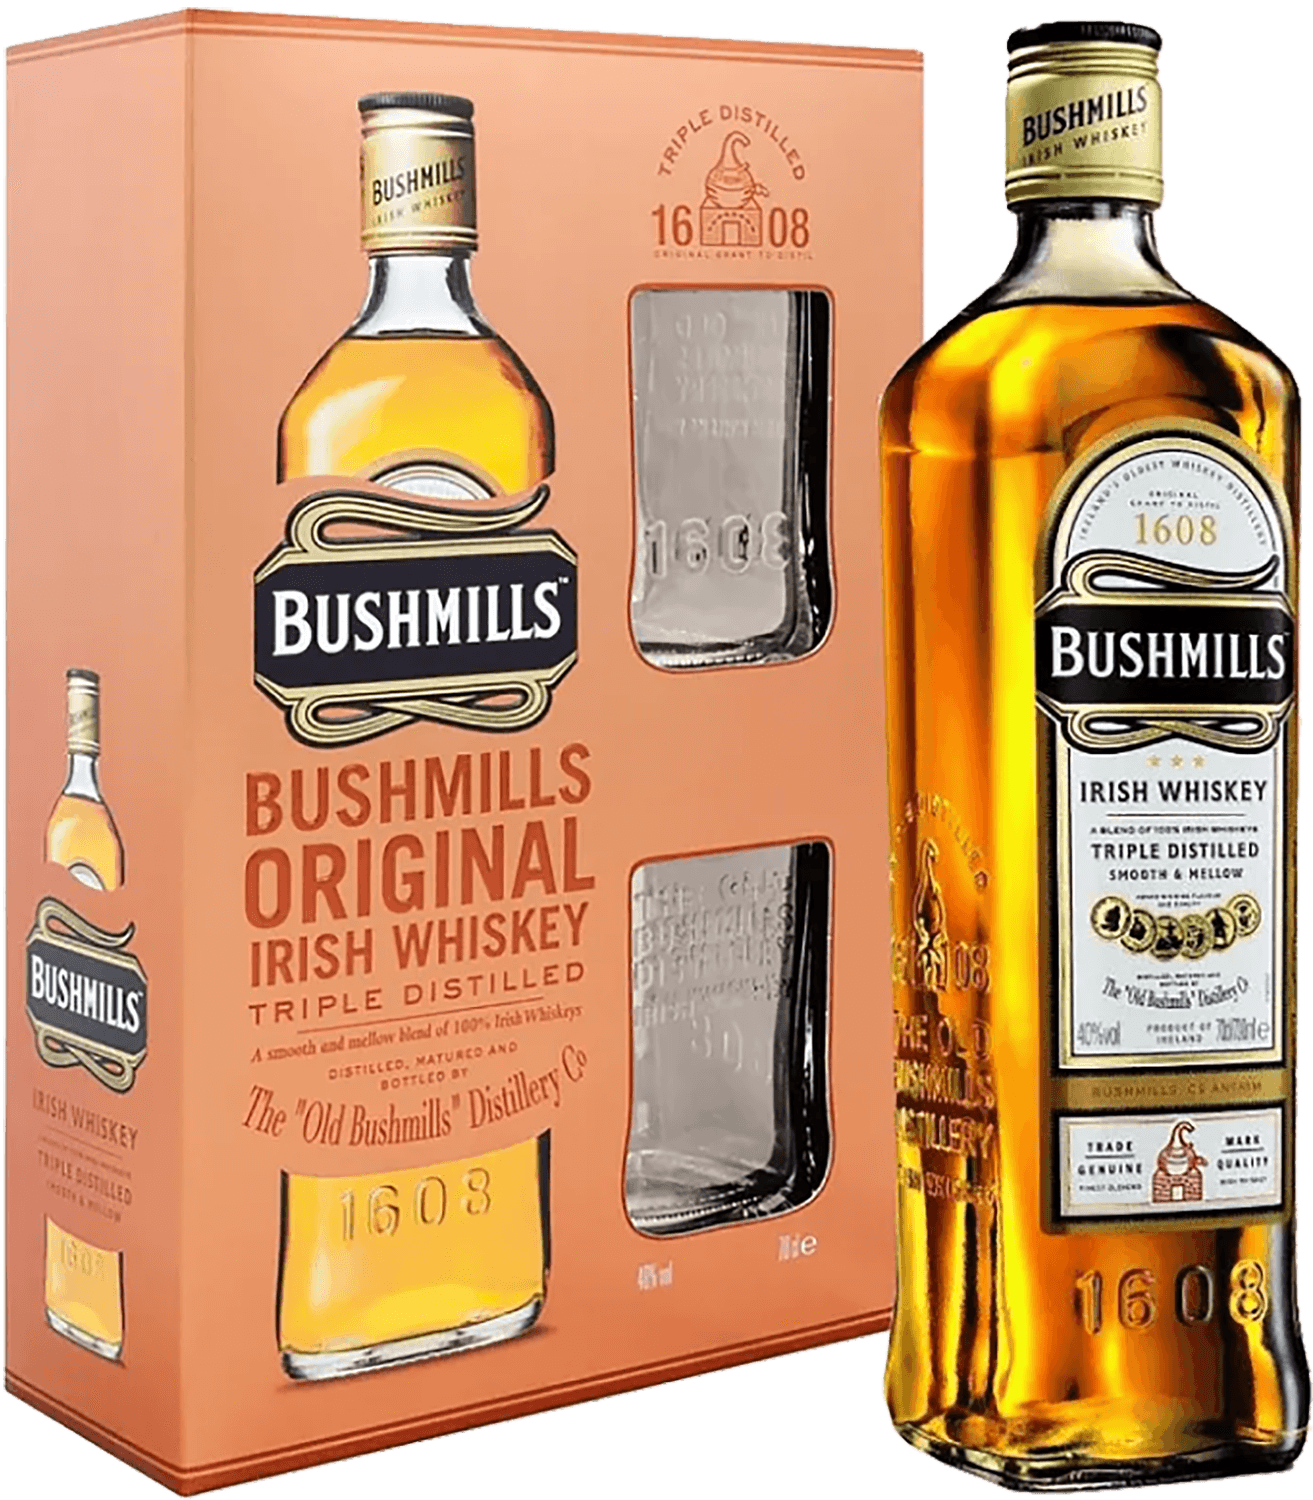 Bushmills Original Blended Irish Whiskey (gift box with 2 glasses) lambay small batch blend irish whiskey 4 y o gift box with 2 glasses